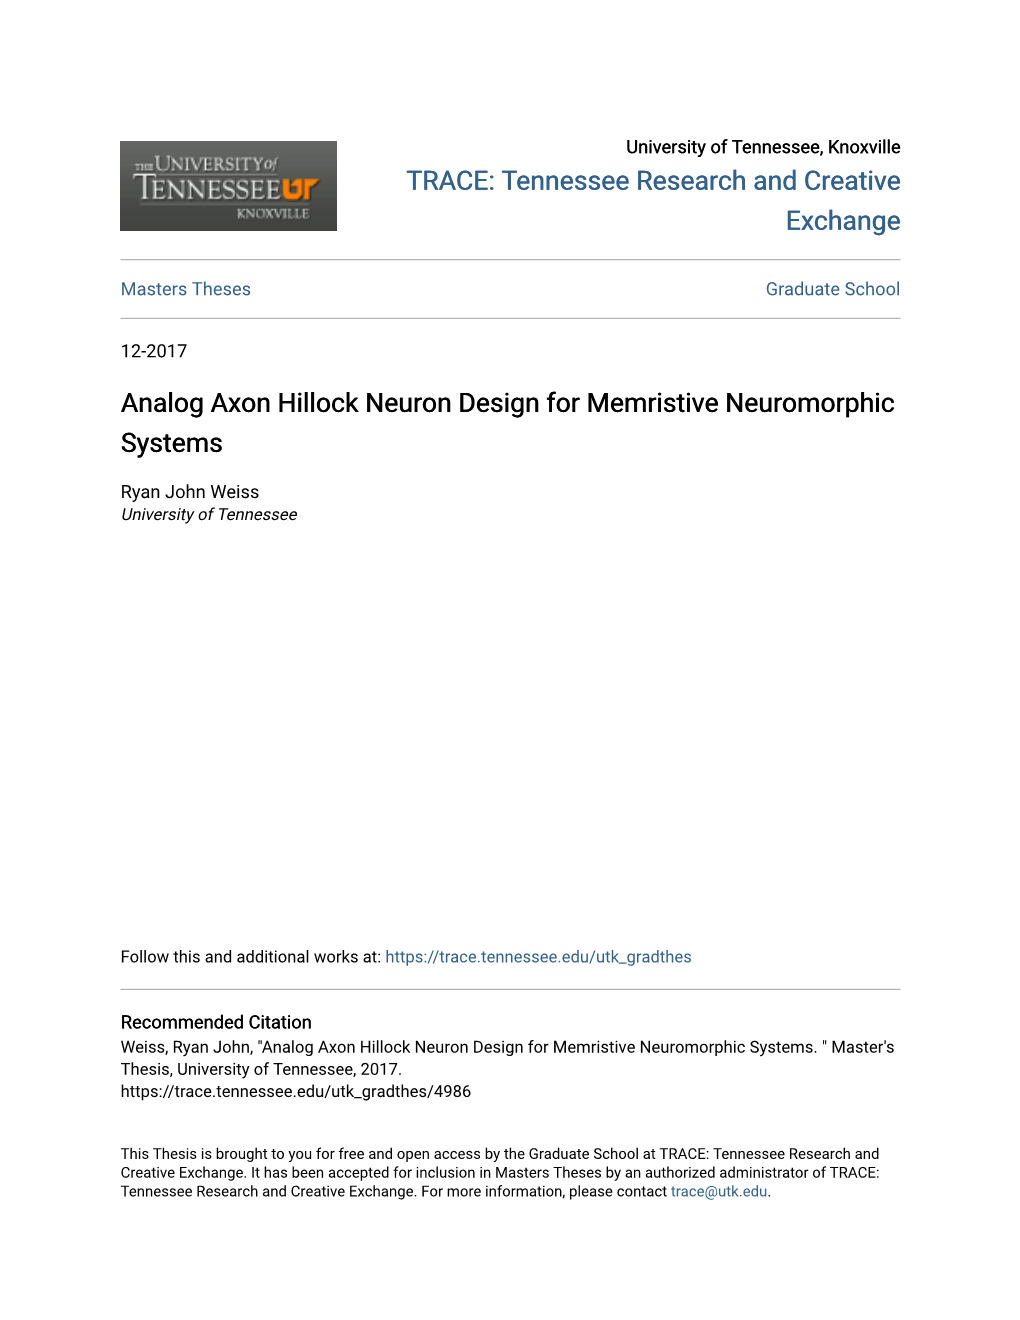 Analog Axon Hillock Neuron Design for Memristive Neuromorphic Systems